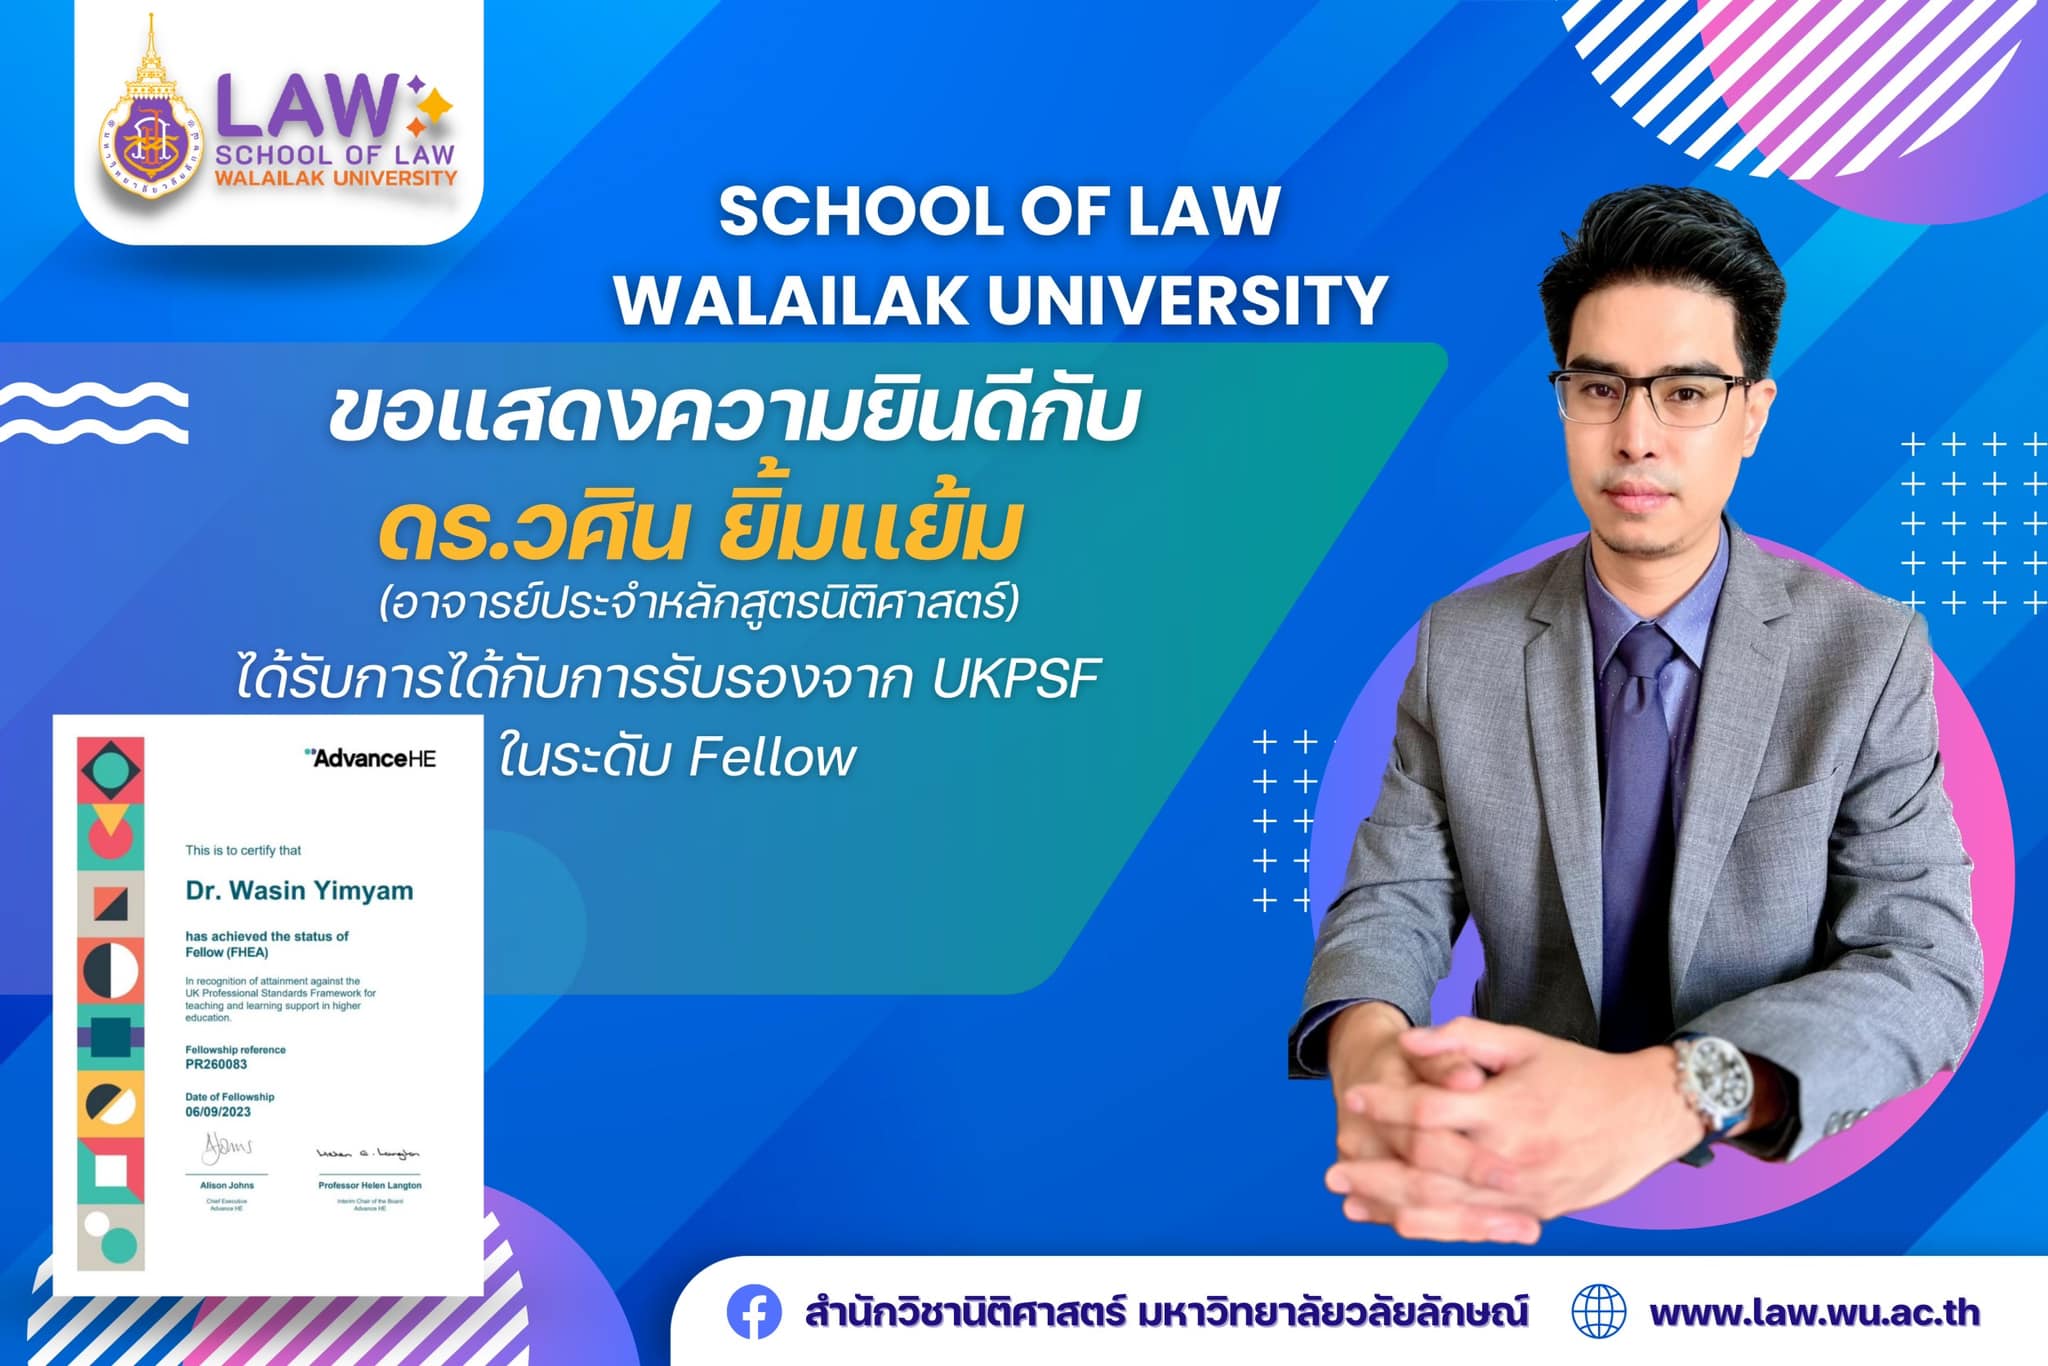 Laws, school of law, WU, นิติศาสตร์, วลัยลักษณ์